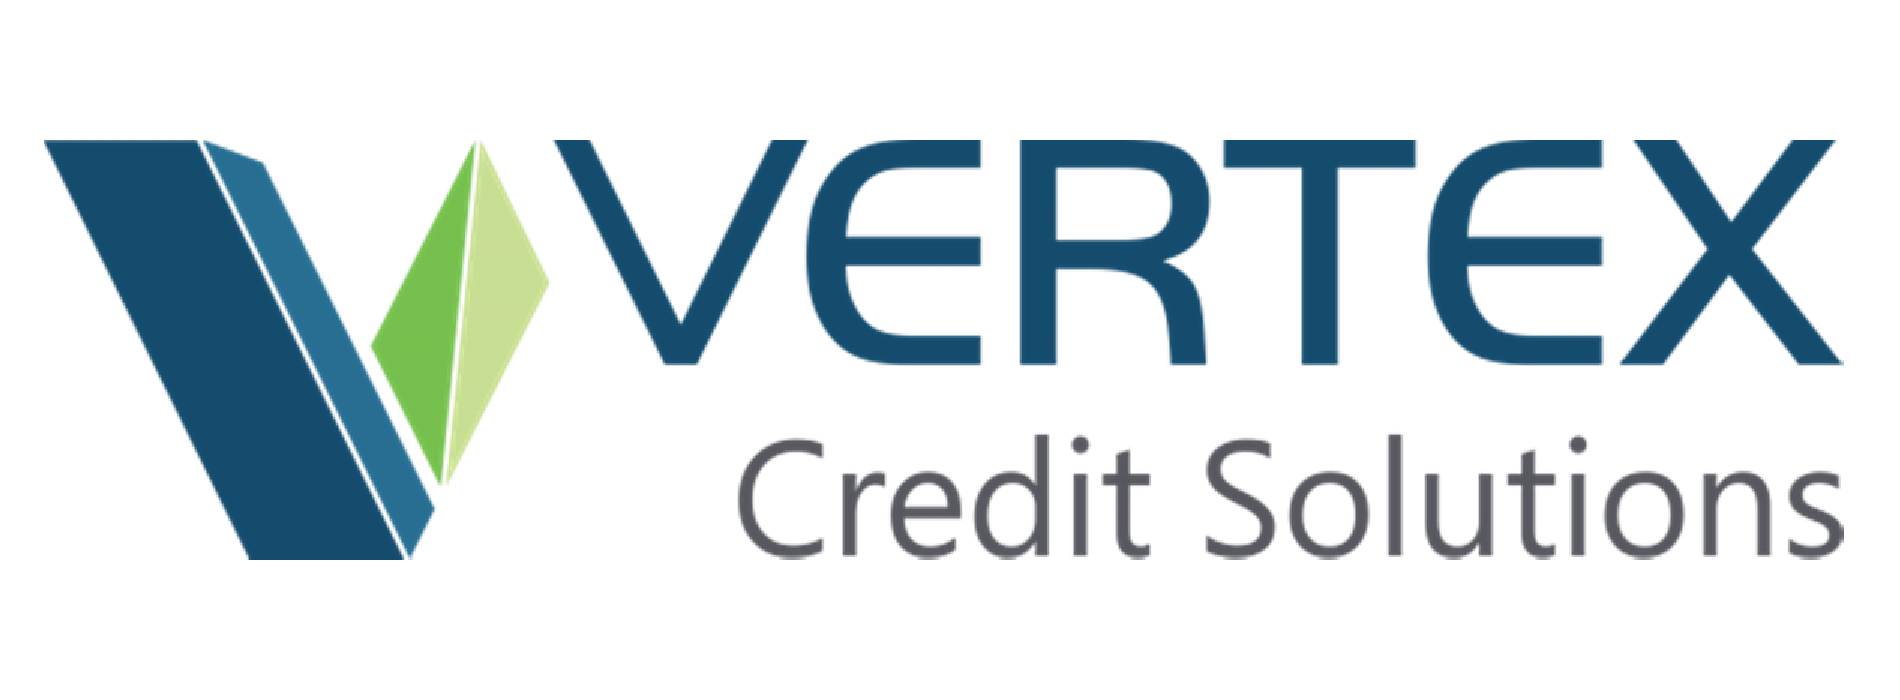 Vertex Credit Solutions